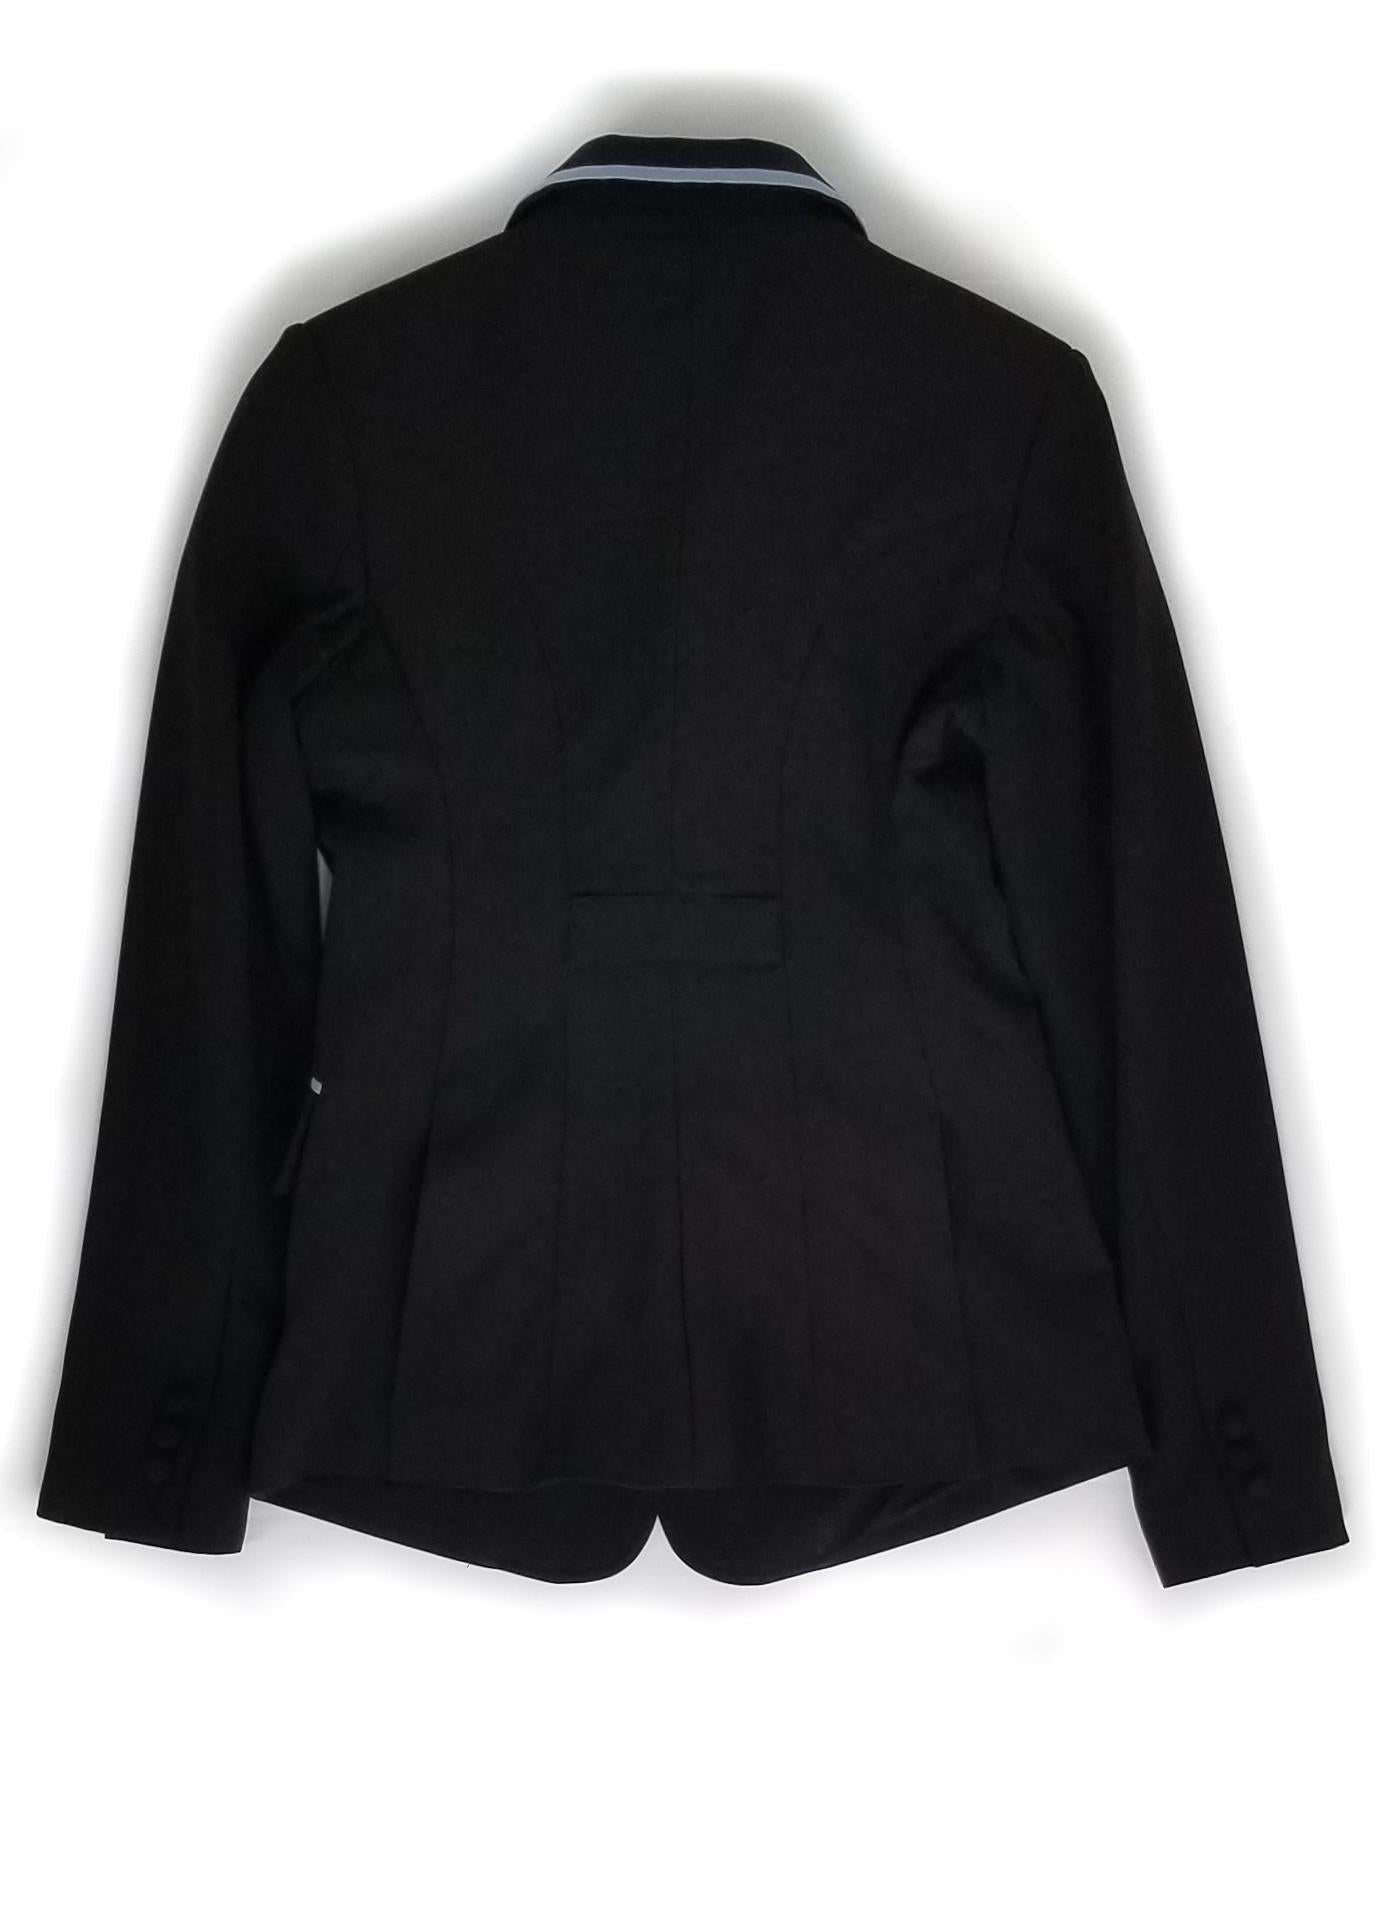 Hayward Sportswear Show Jacket - Black with Baby Blue Piping - Women's 6